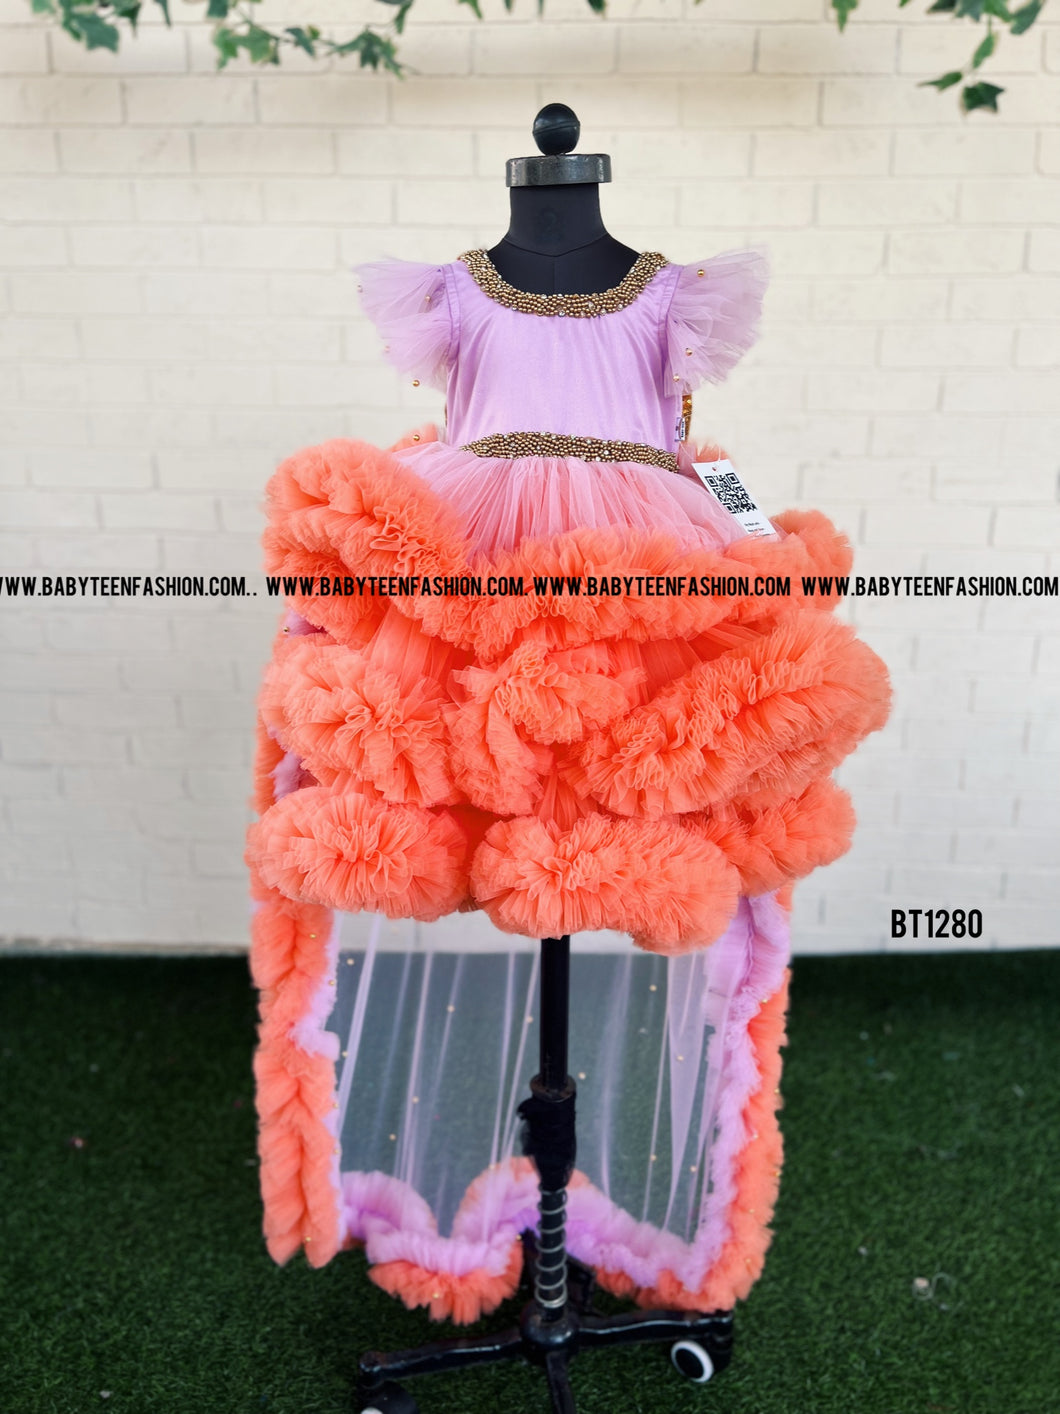 BT1280 Sunset Ruffle Fantasy Gown – A Burst of Joy